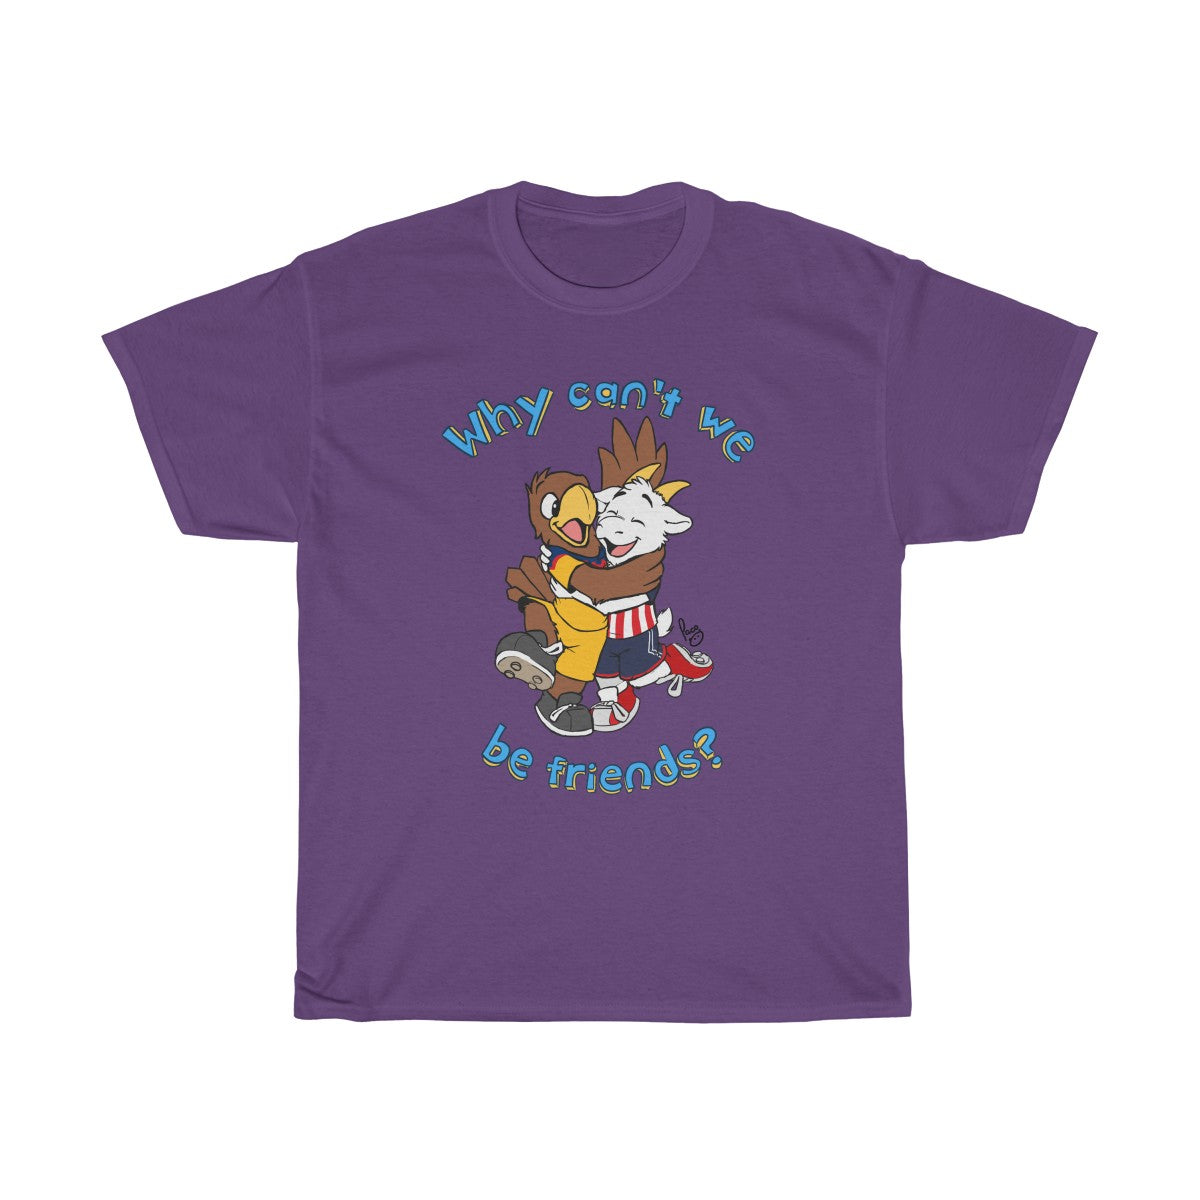 Why Can't we be Friends? - T-Shirt T-Shirt Paco Panda Purple S 